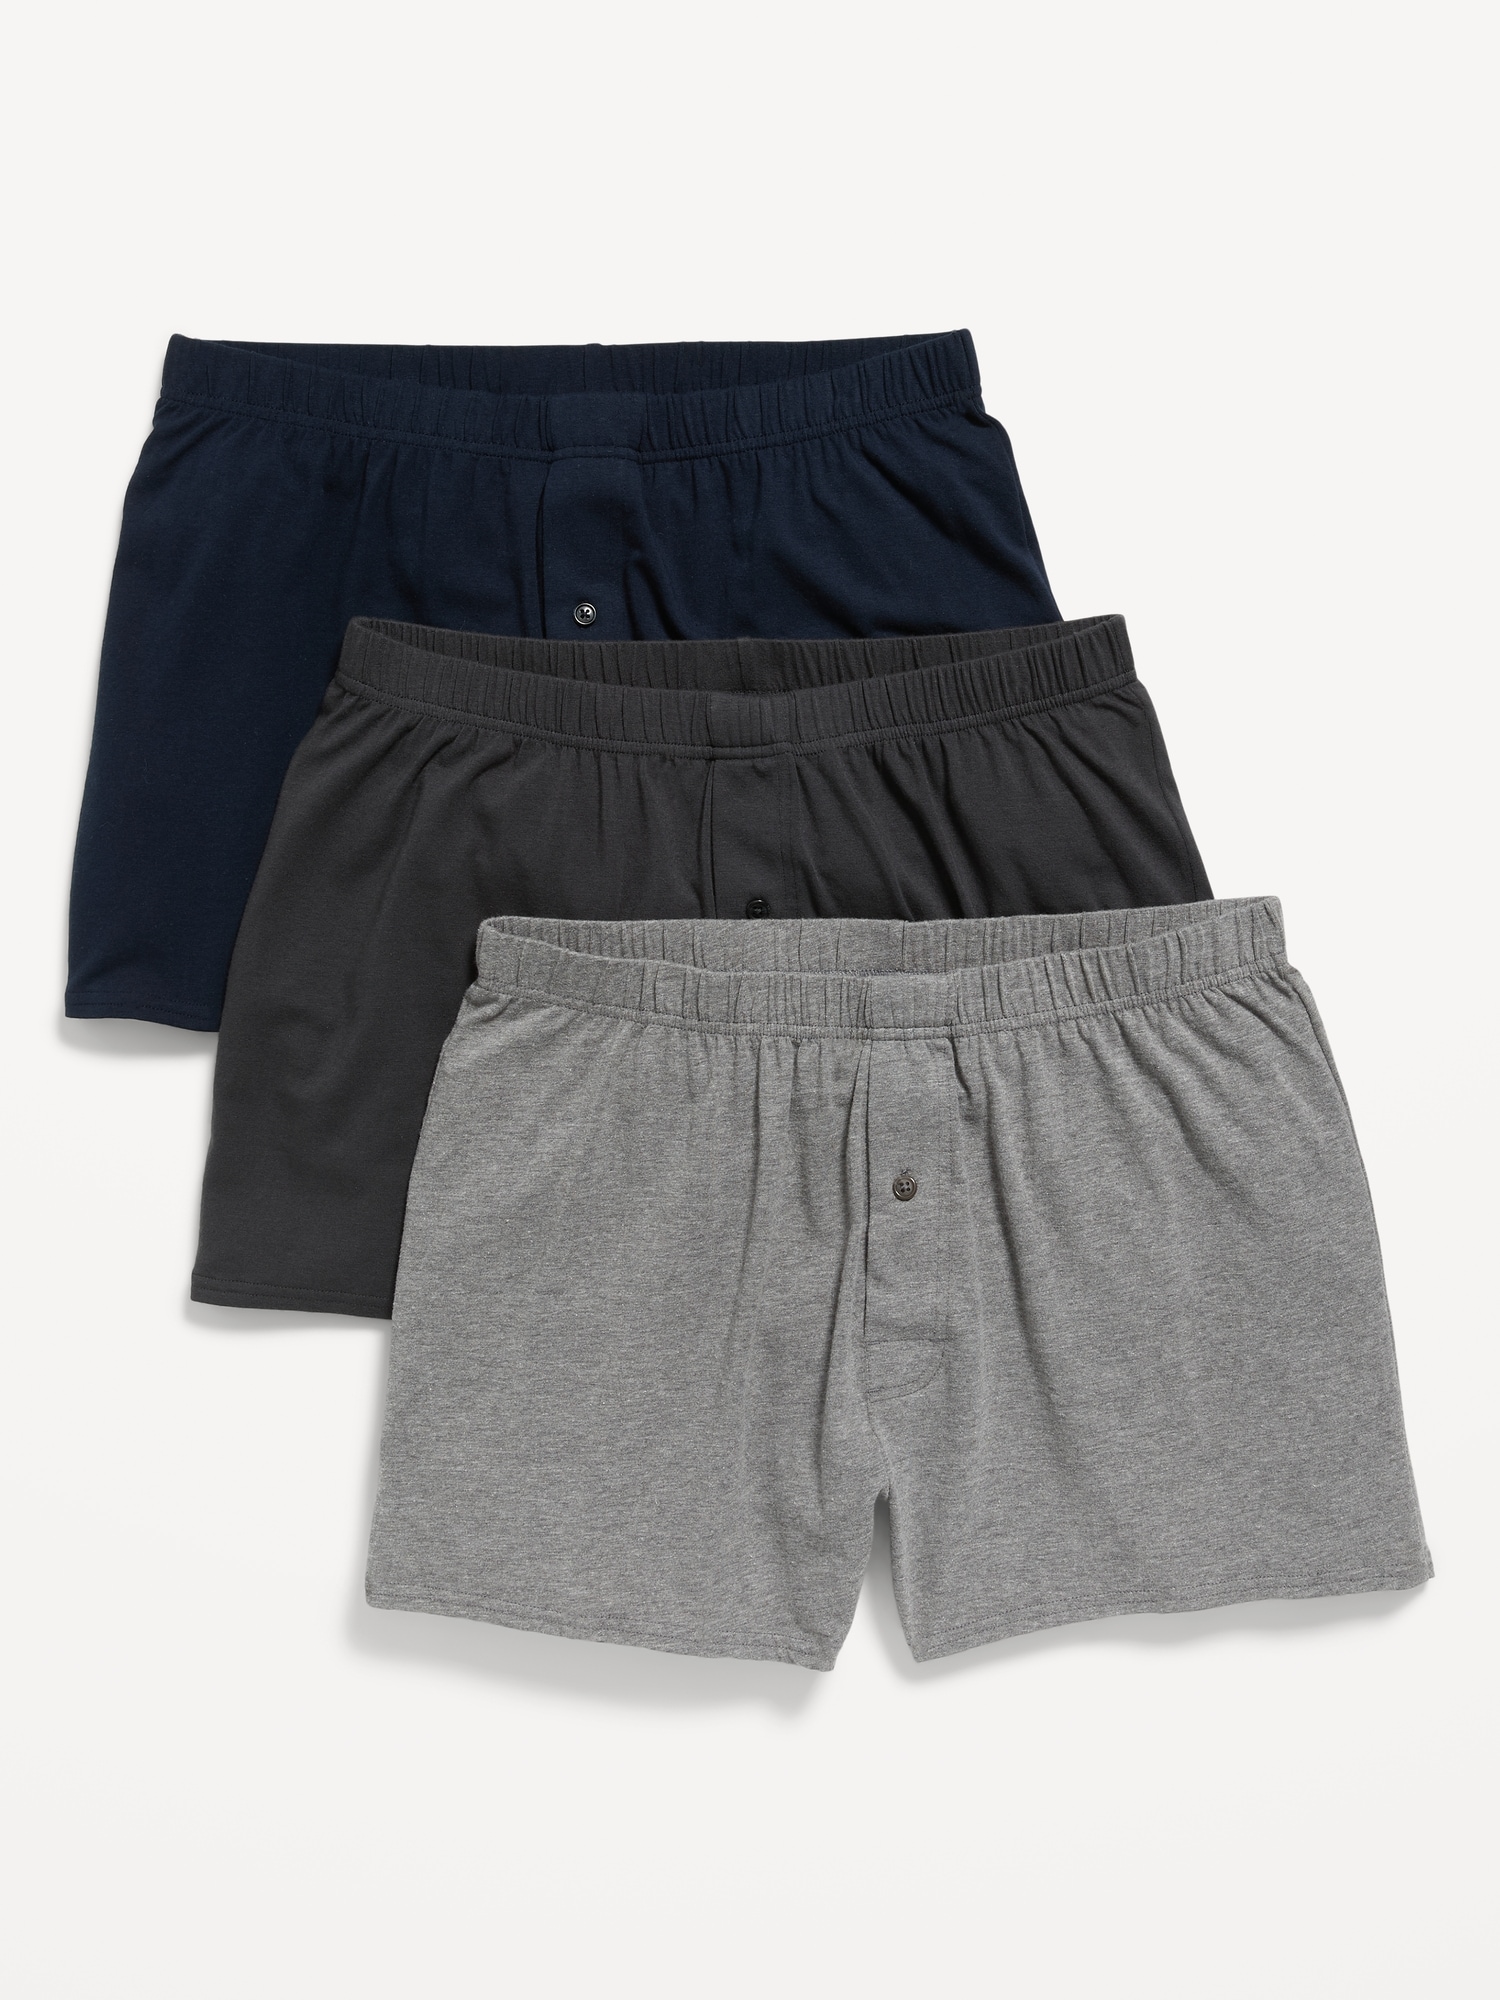 Old Navy Solid Jersey-Knit Boxer-Brief Underwear 3-Pack for Men--6.25-inch inseam multi. 1